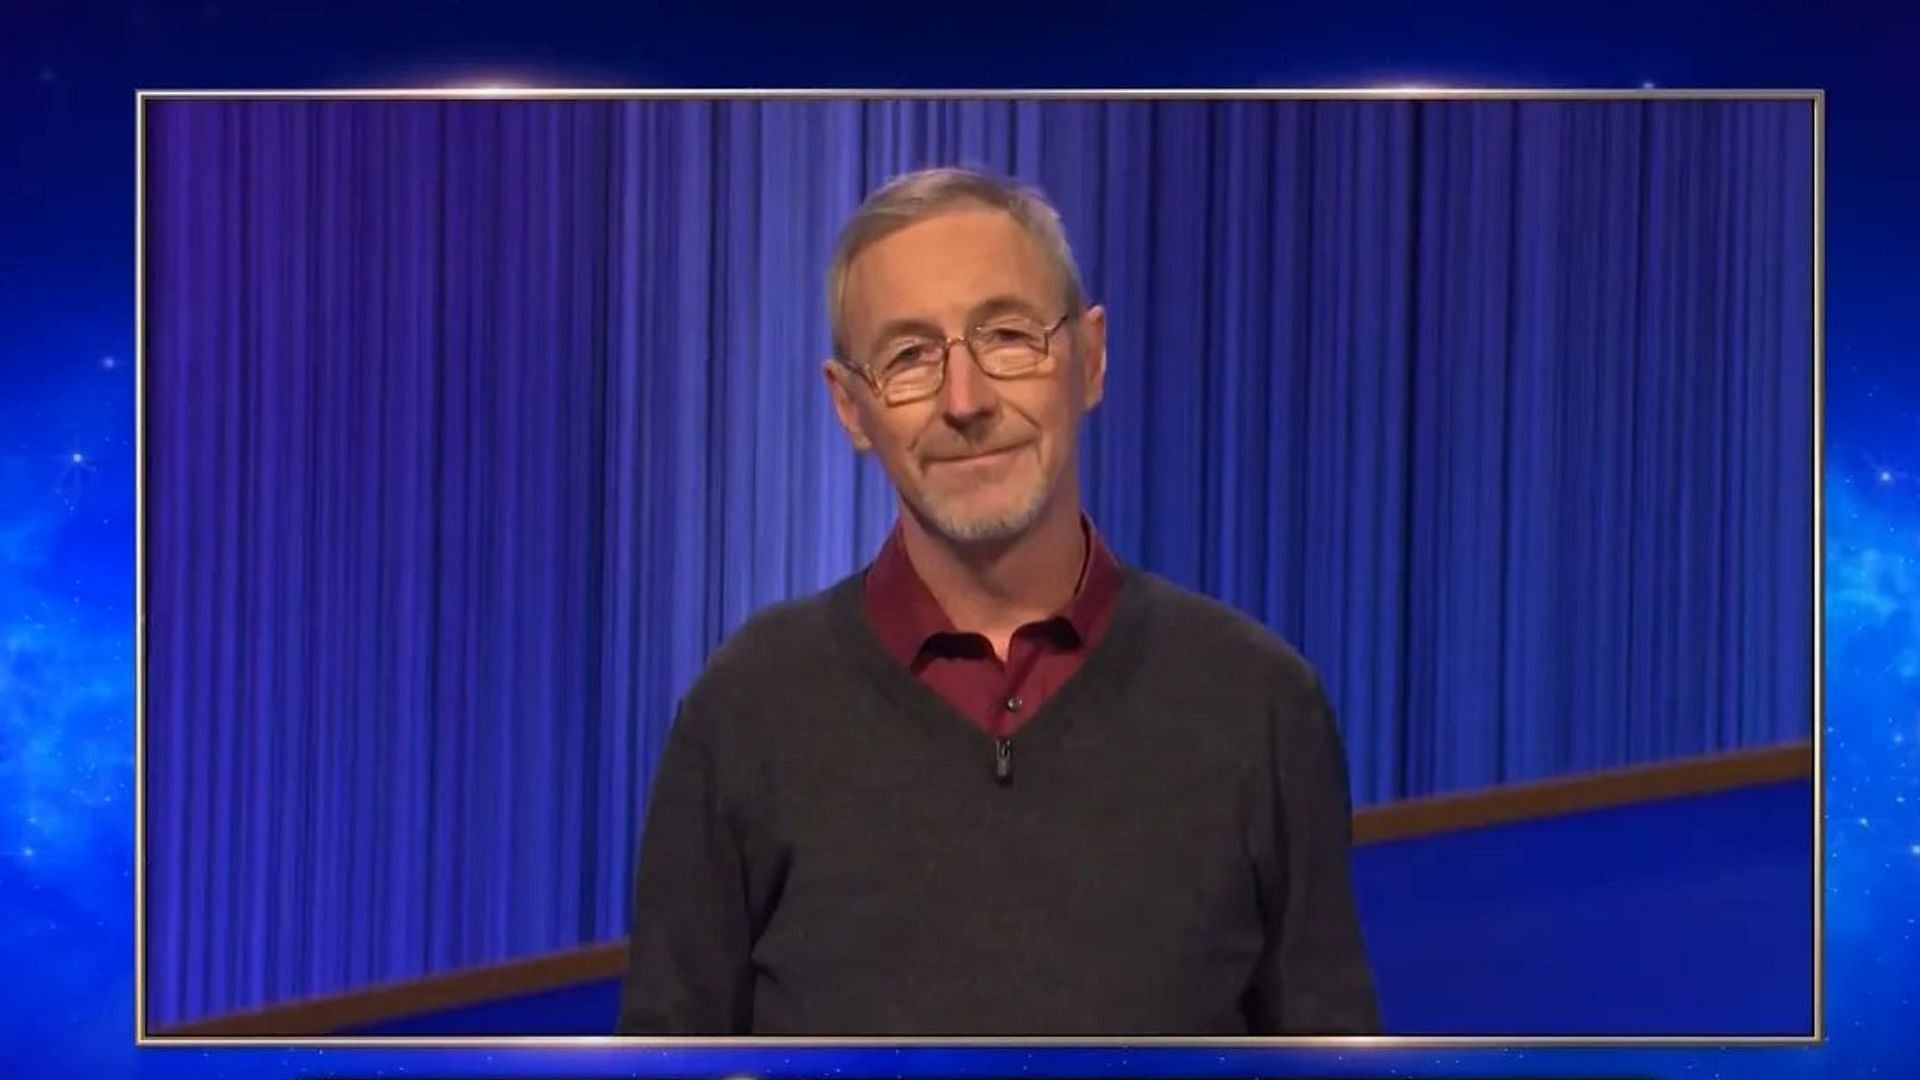 Who won Jeopardy! tonight? December 19, 2022, Monday